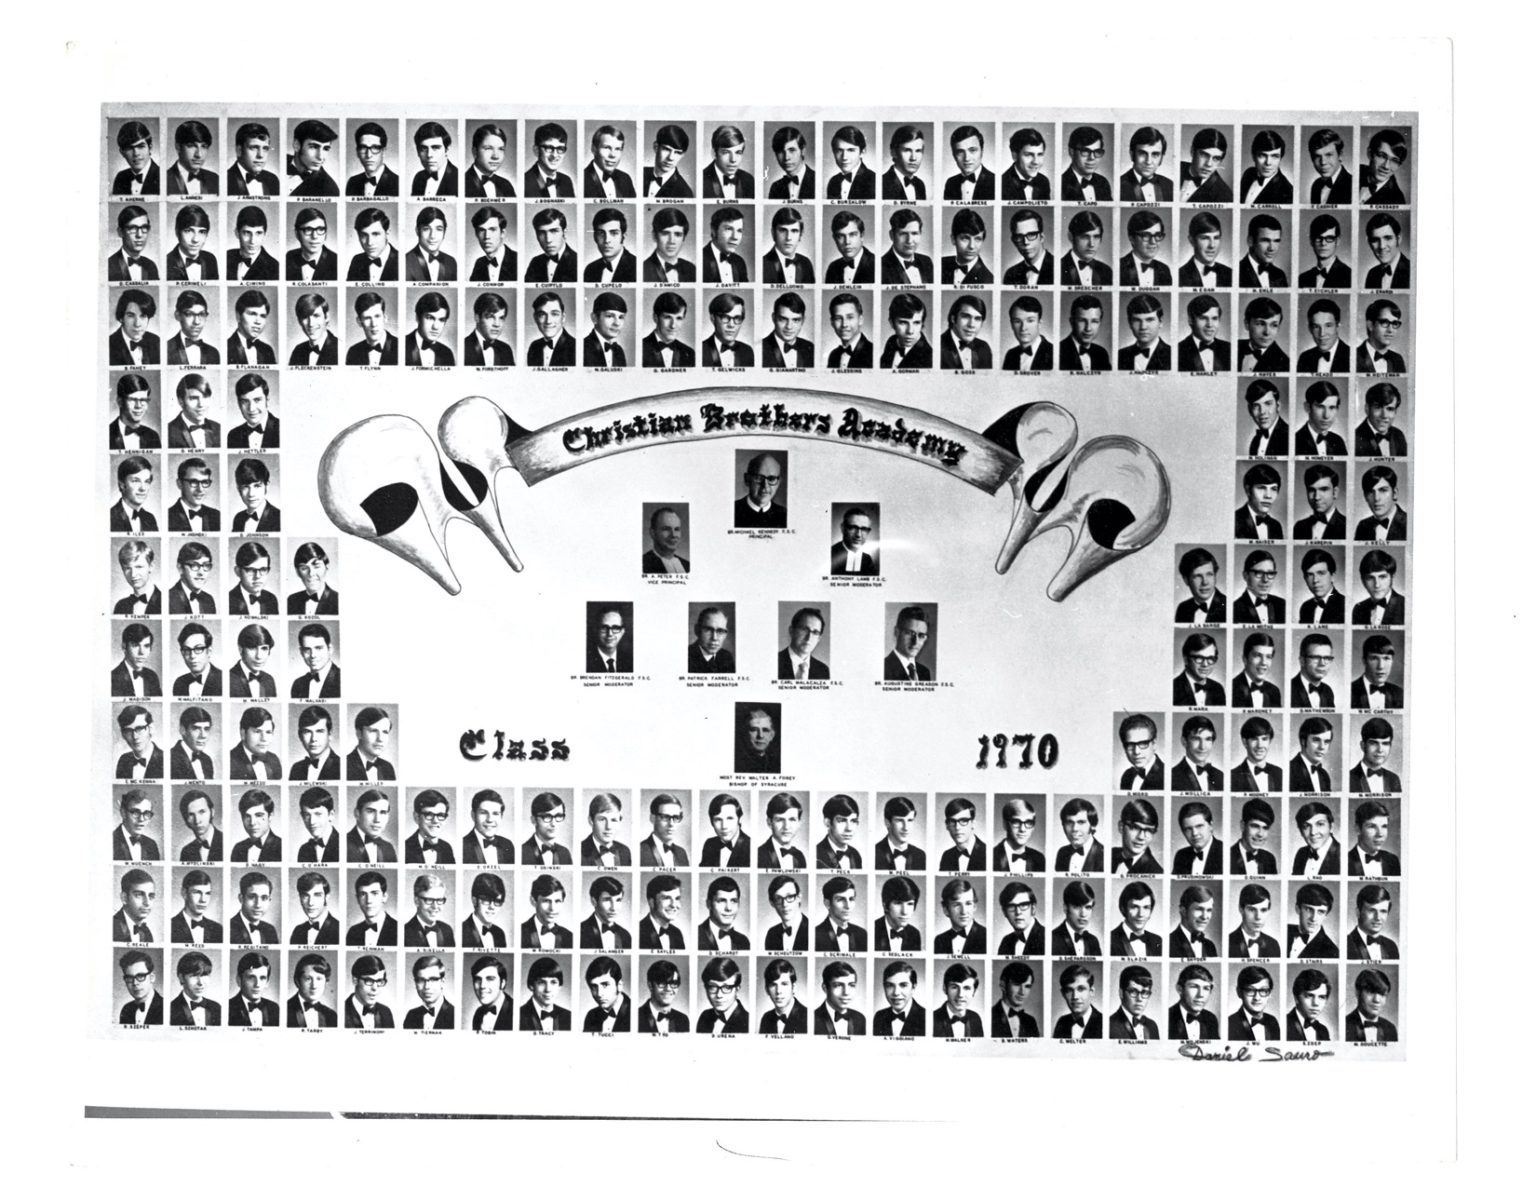 cba class of 1970